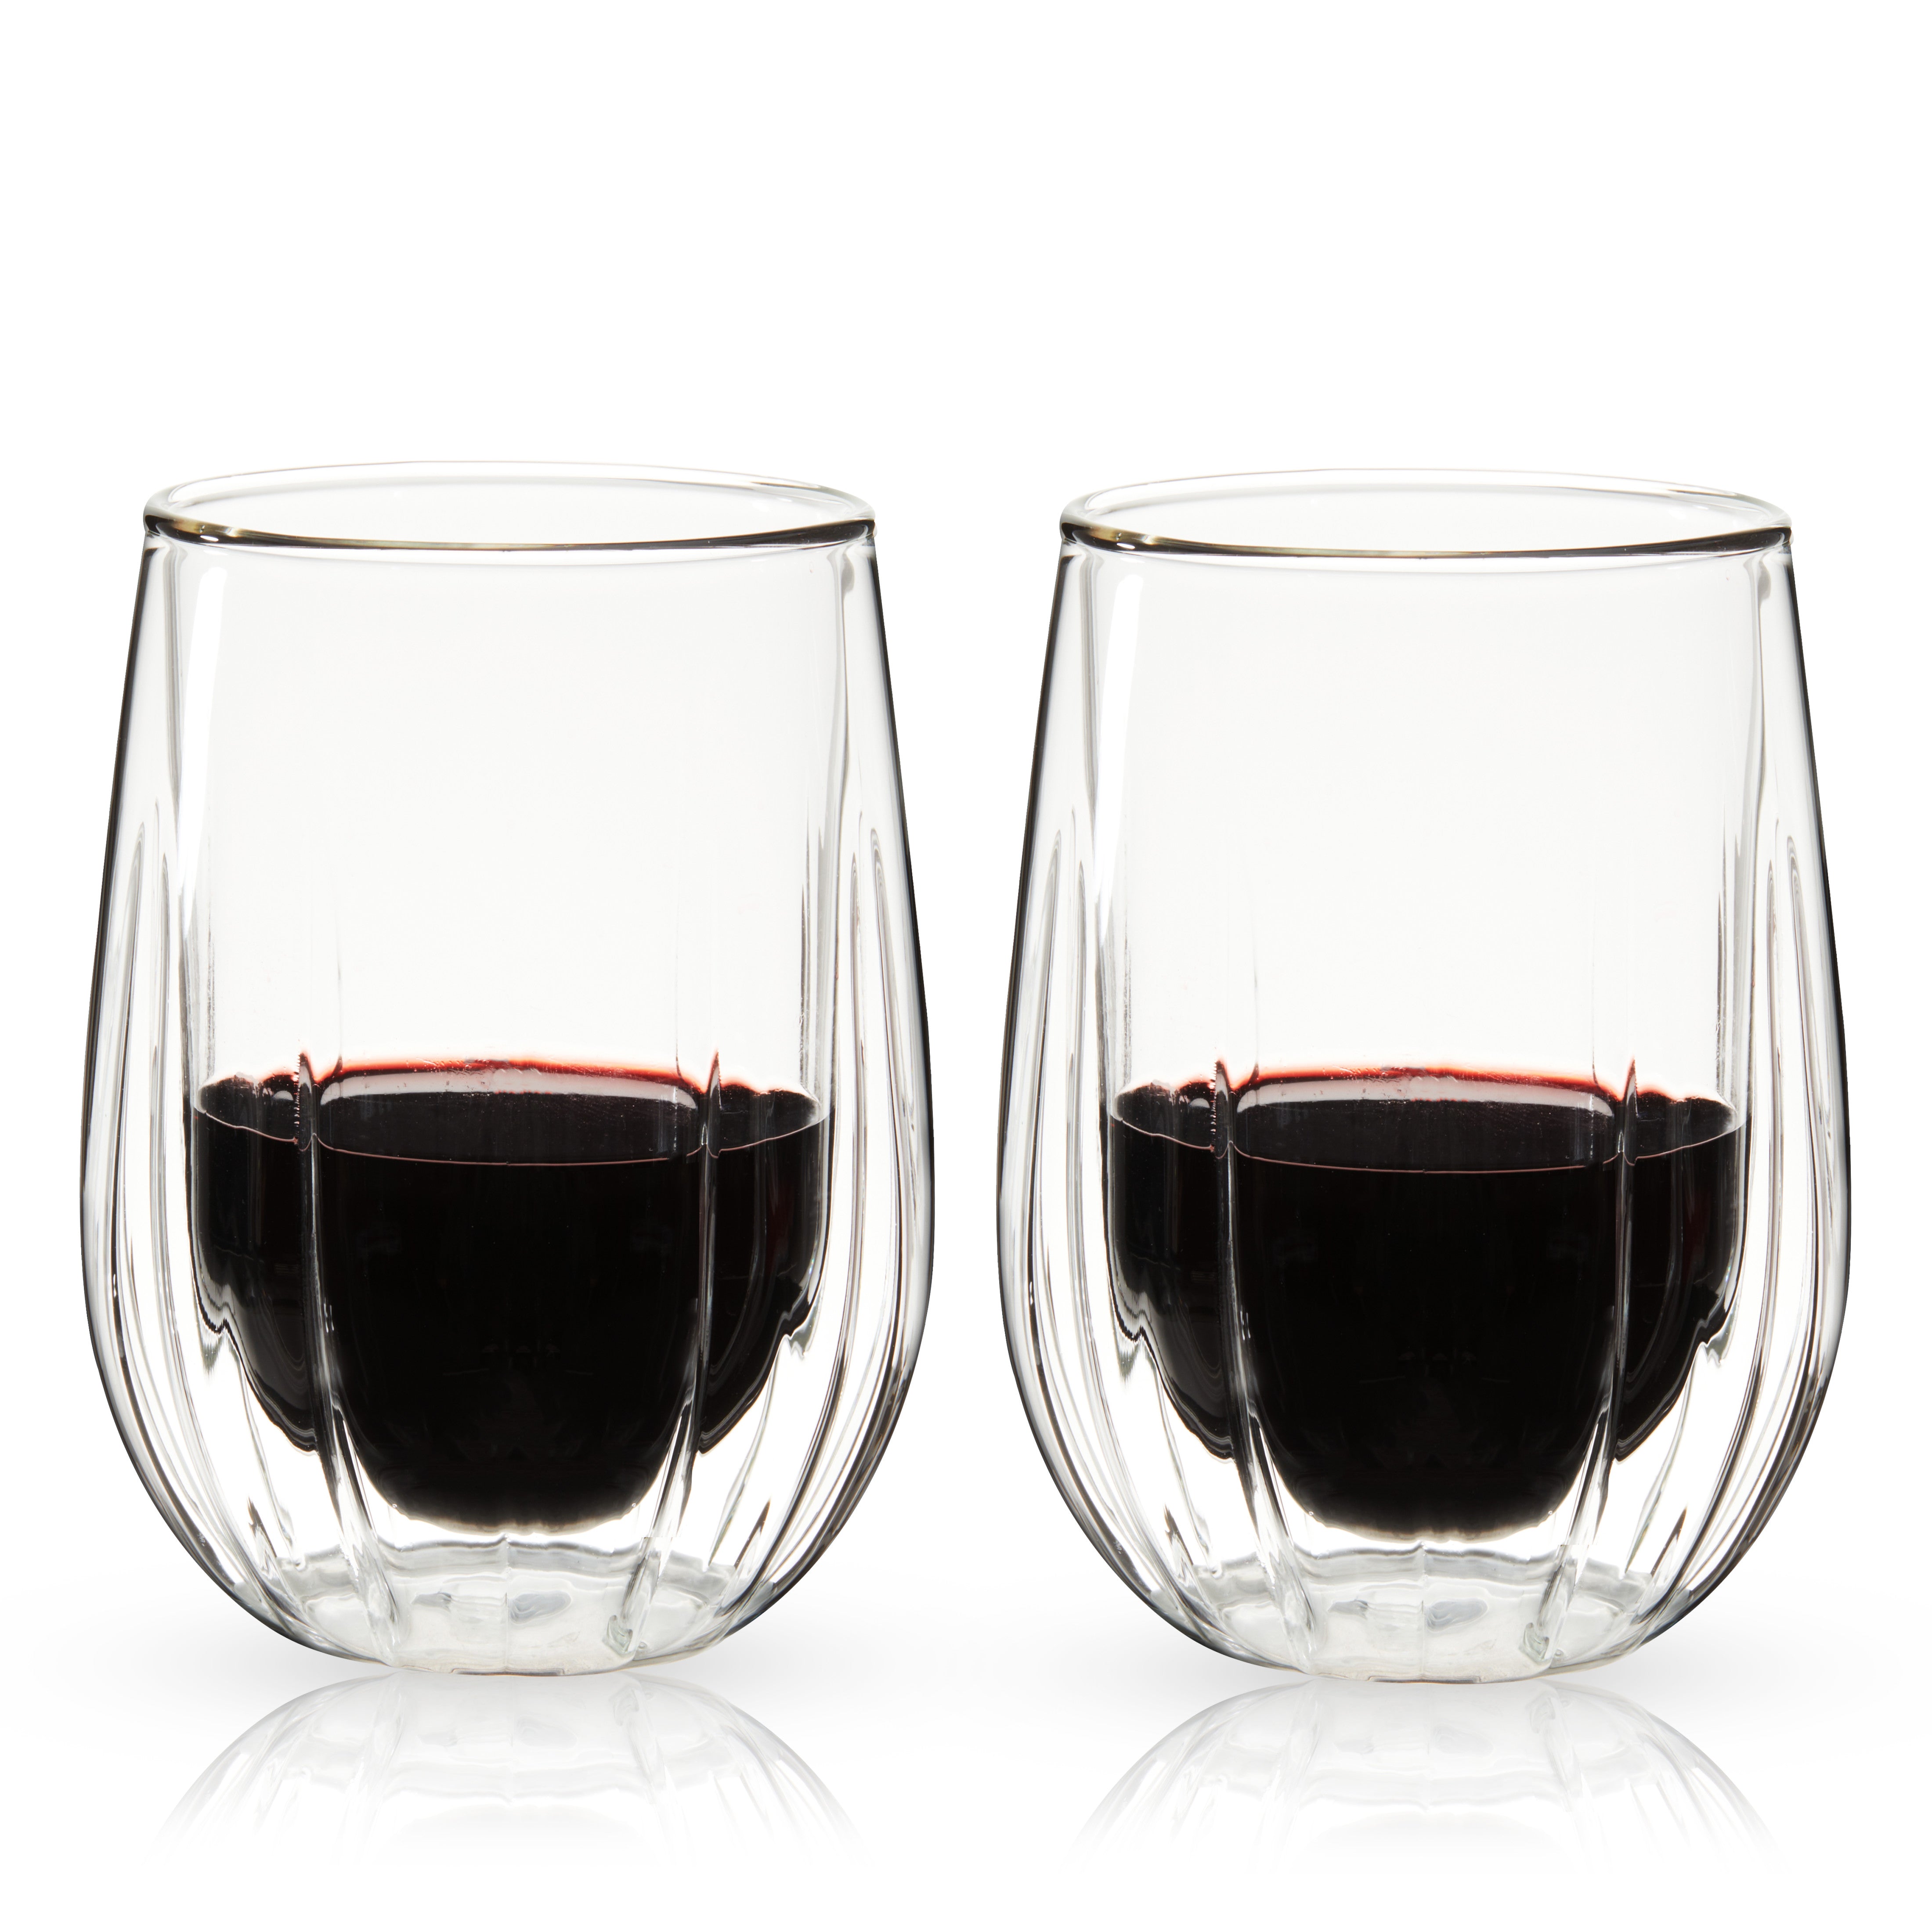 Double Wall Stemless Martini Glasses, Set of 2, Borosilicate Glass